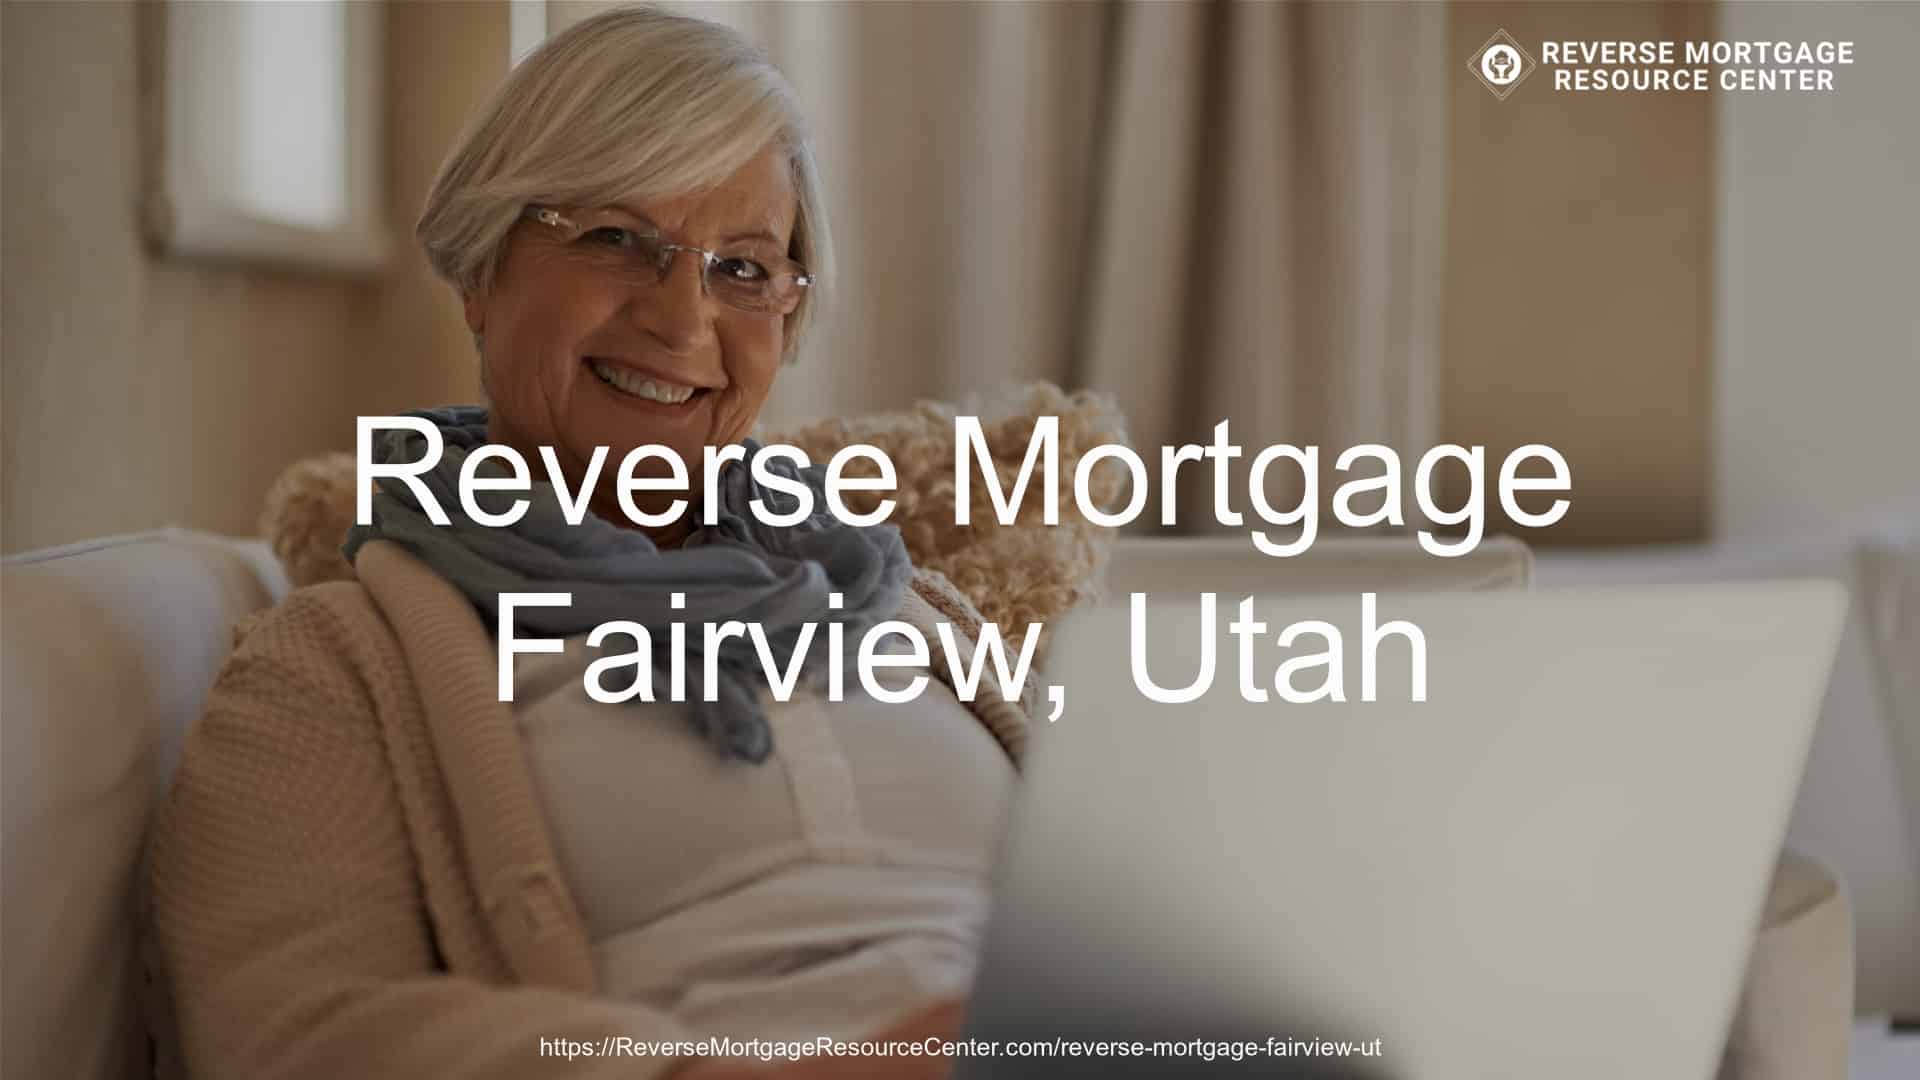 Reverse Mortgage Loans in Fairview Utah